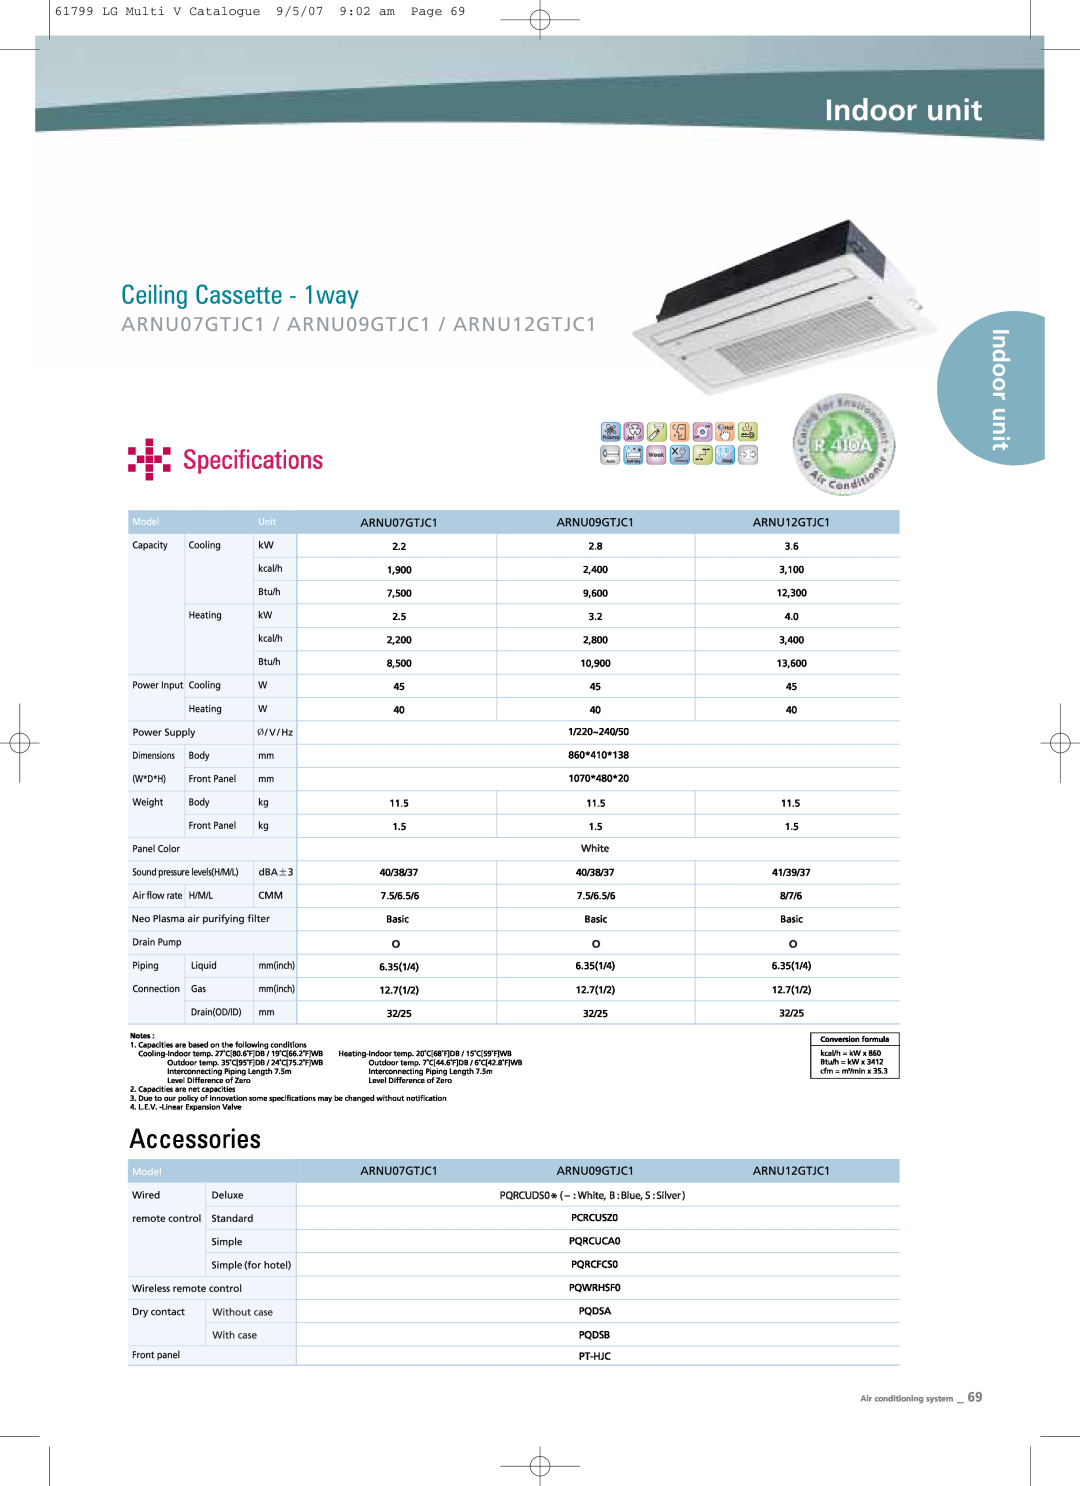 LG Electronics PRHR040 manual Ceiling Cassette - 1way, Specifications, Indoor unit, ARNU07GTJC1 / ARNU09GTJC1 / ARNU12GTJC1 